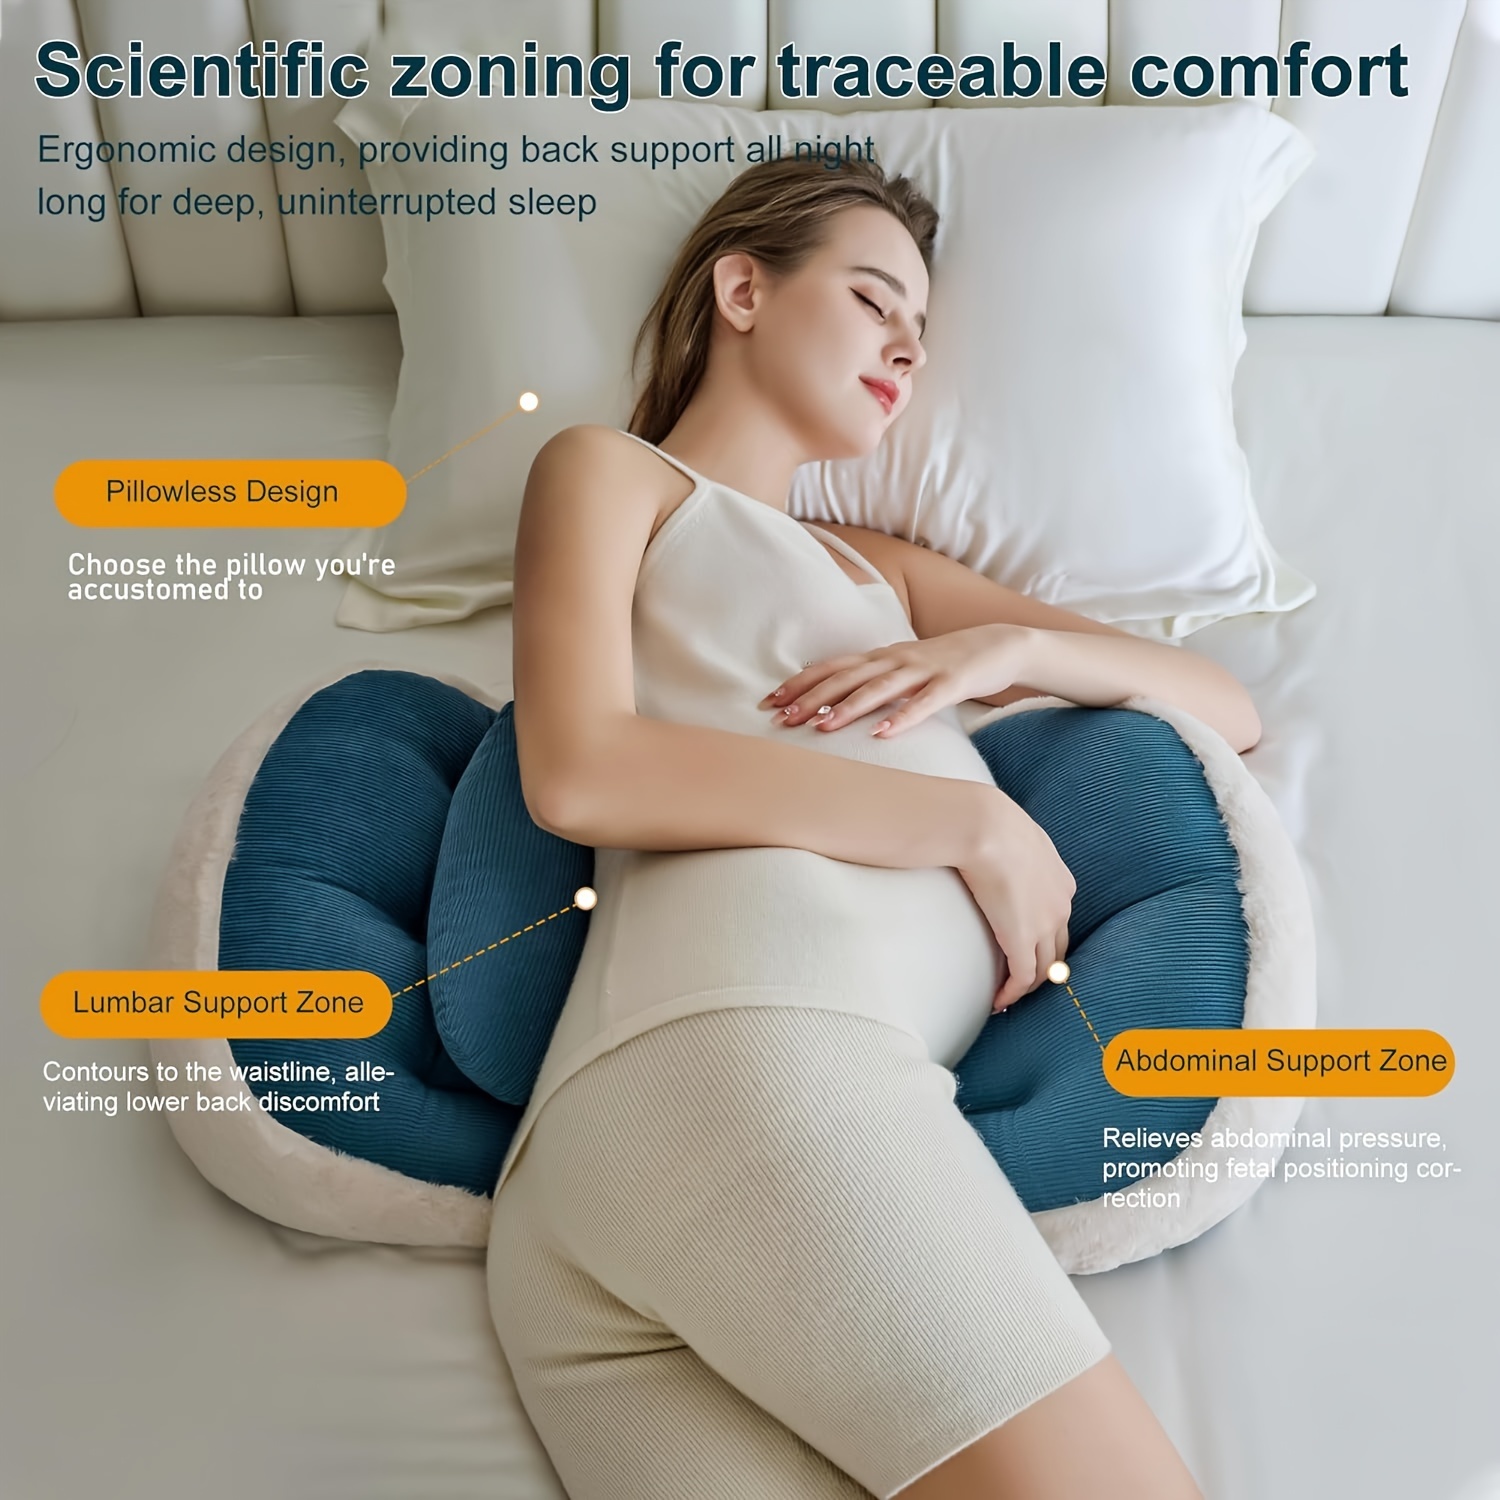 Comfort Swan Body Pillow